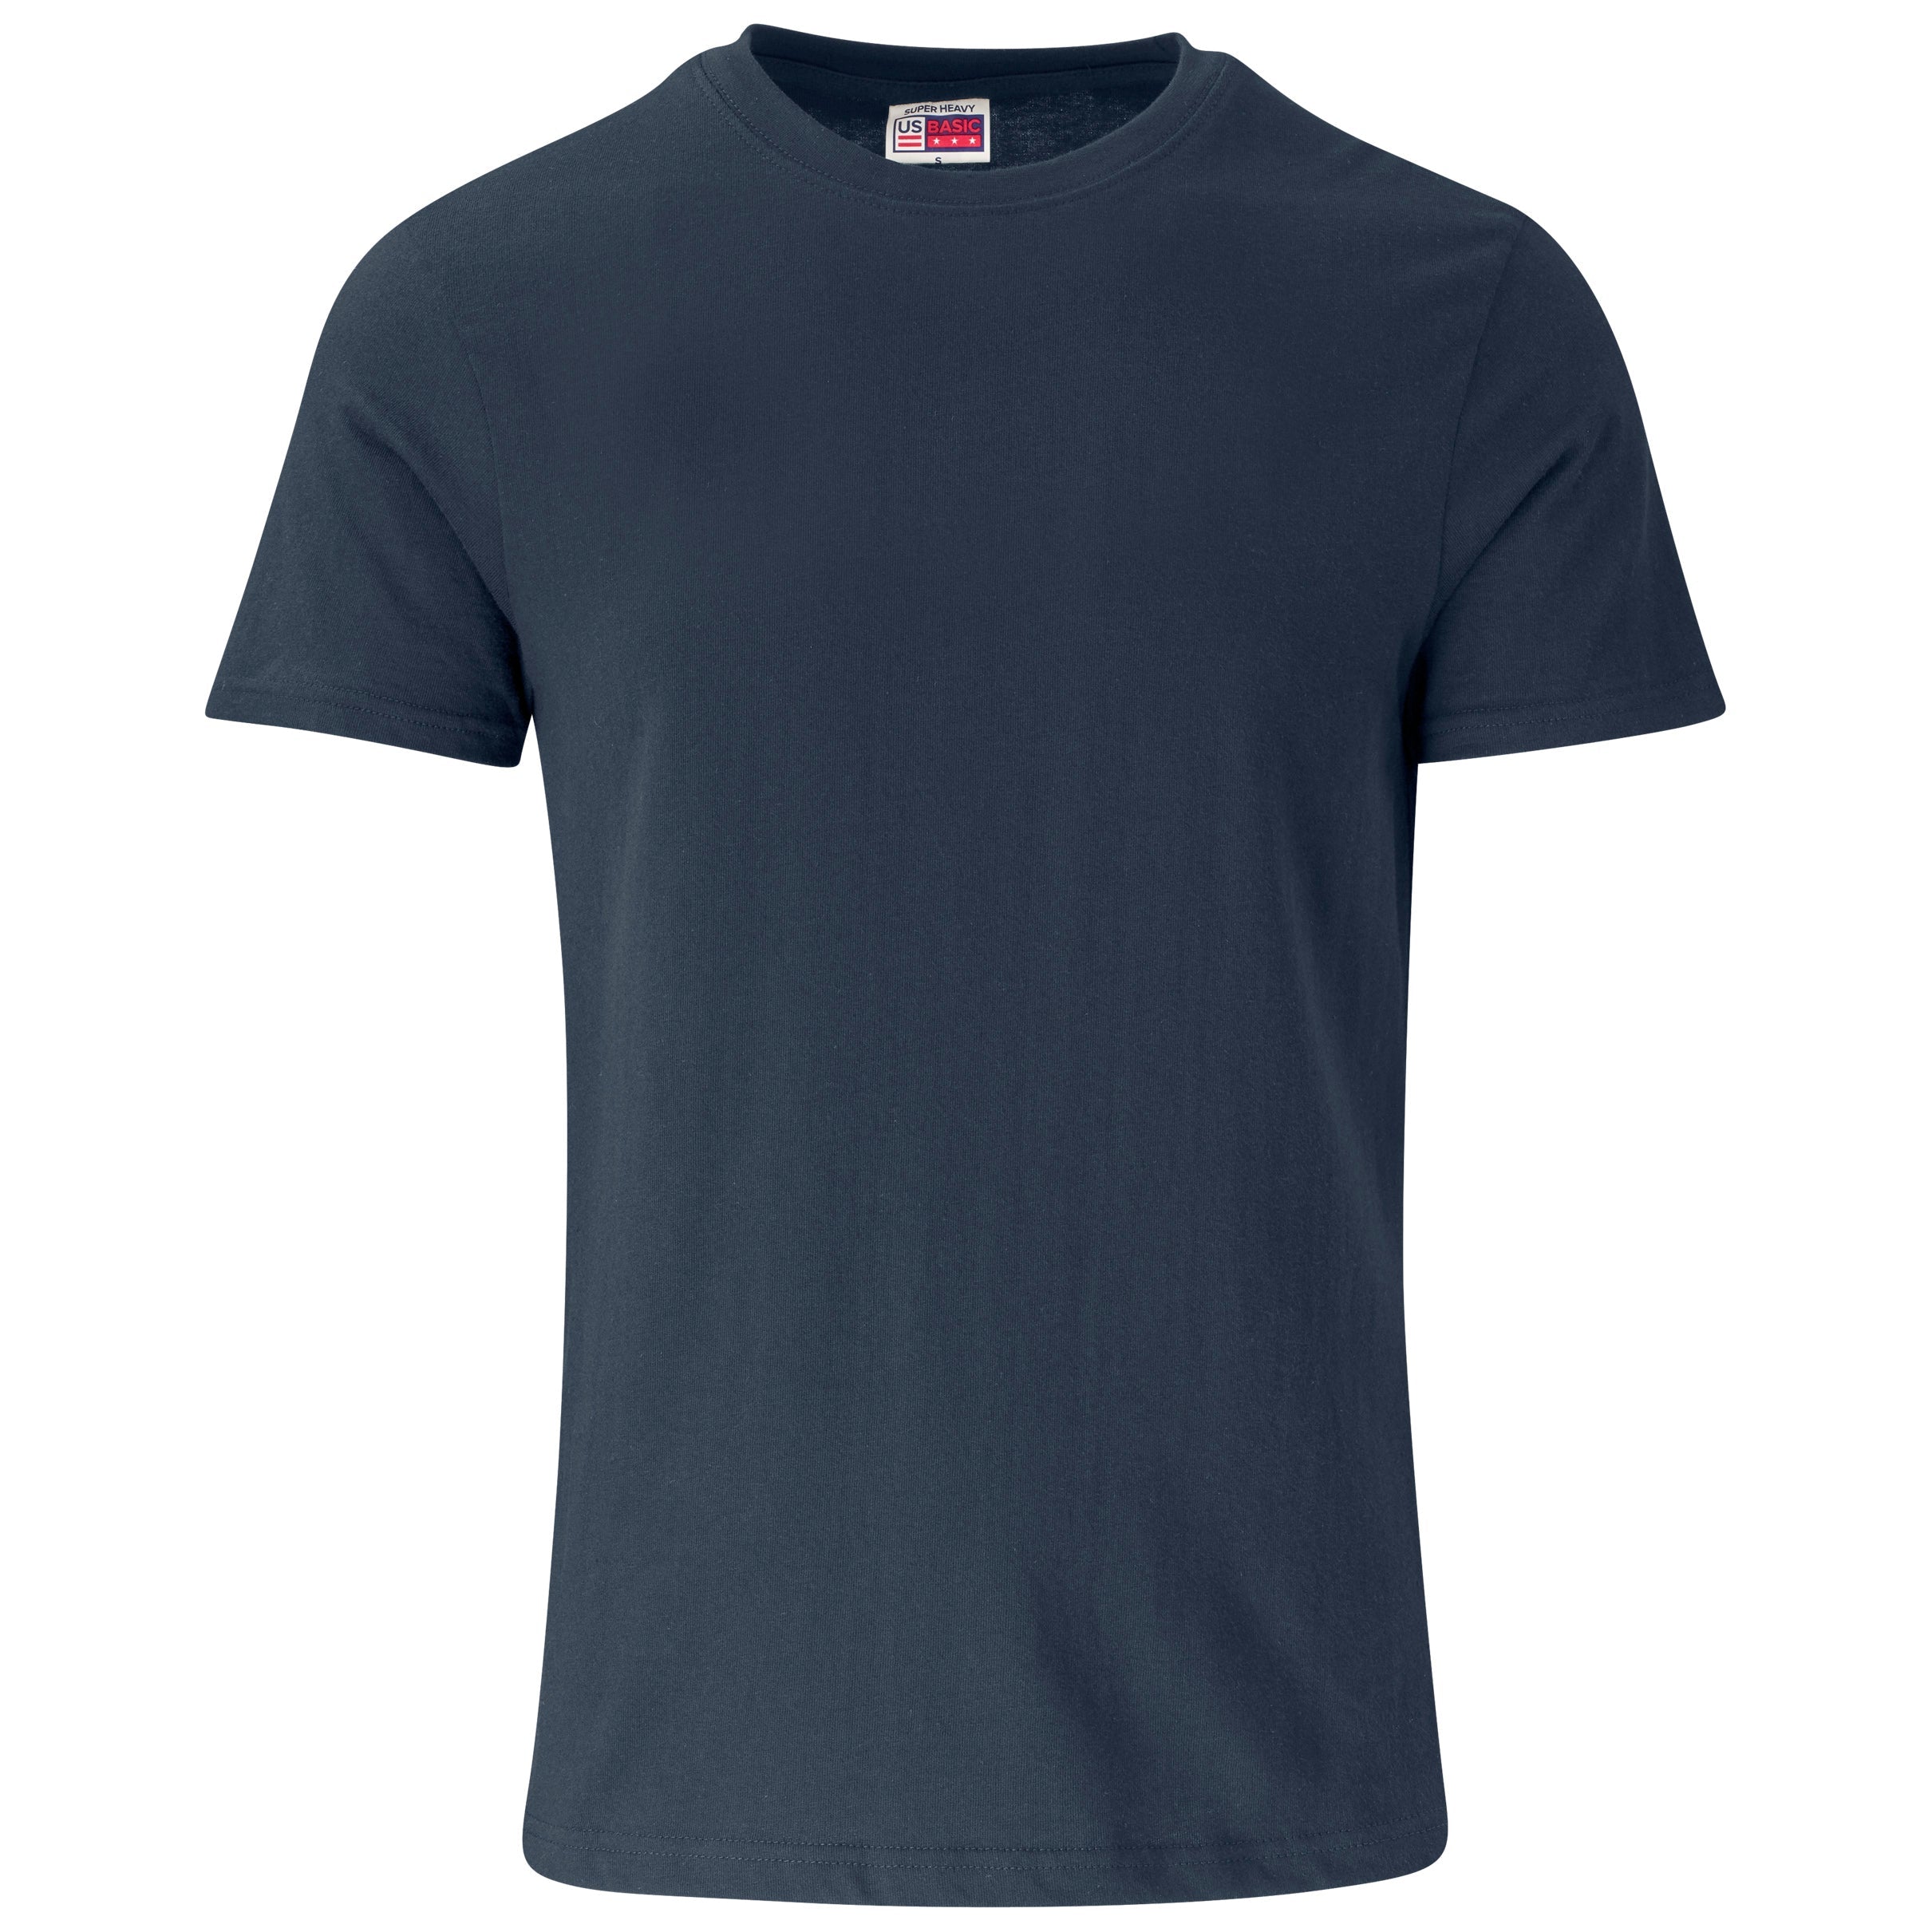 Unisex Super Club 180 T-Shirt-L-Navy-N